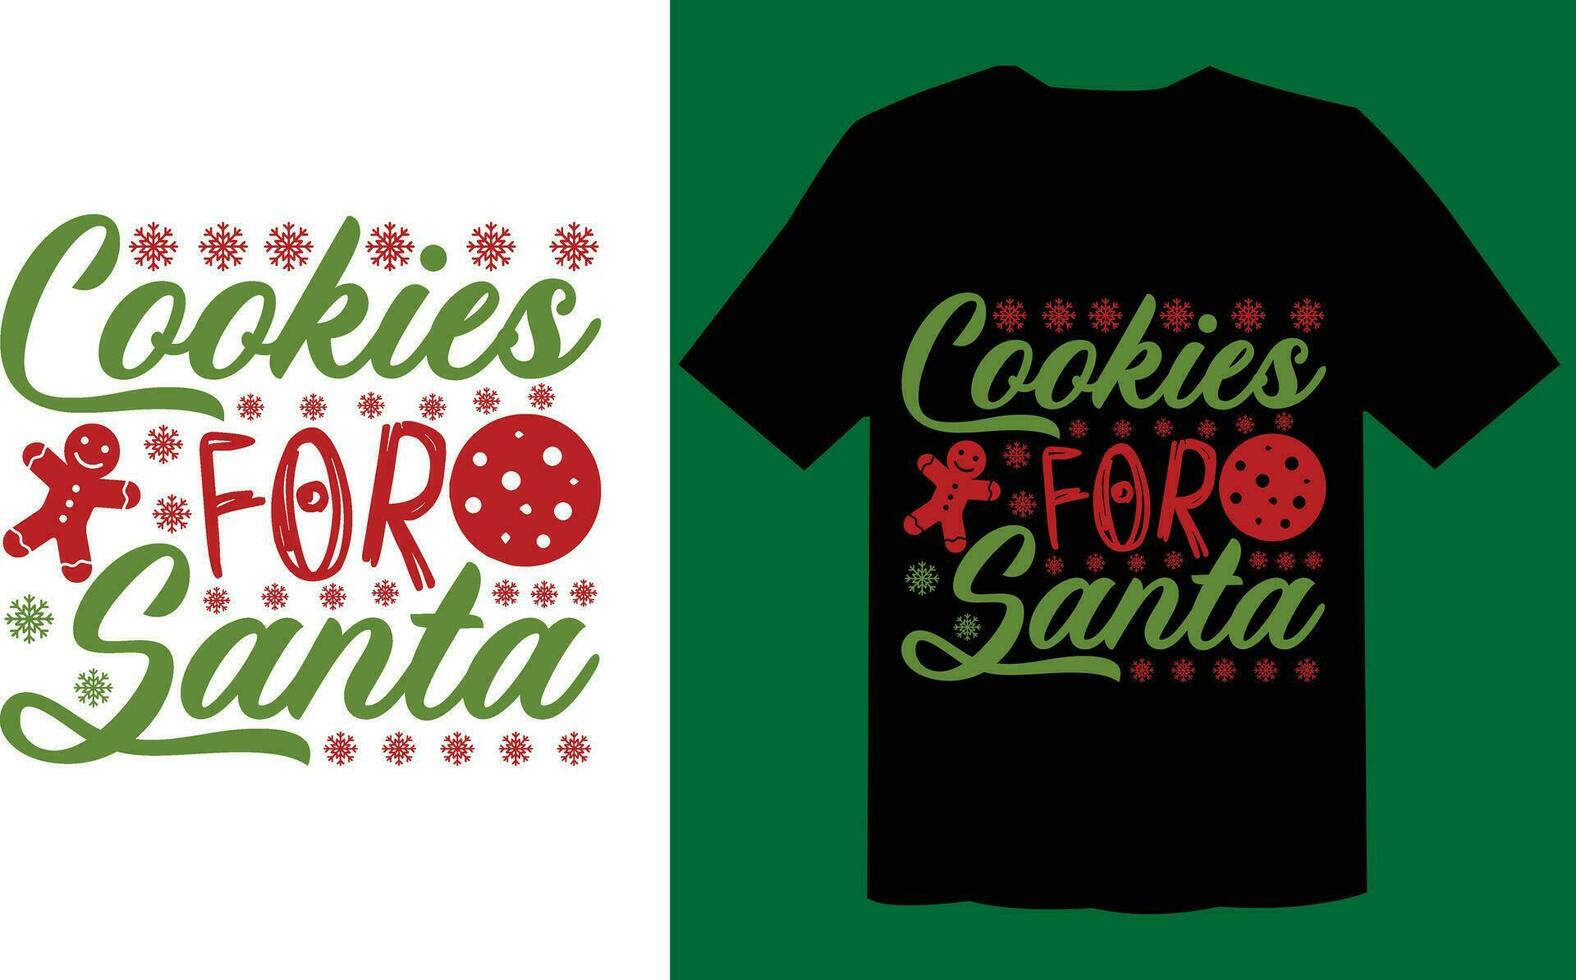 Cookies For Santa T Shirt vector